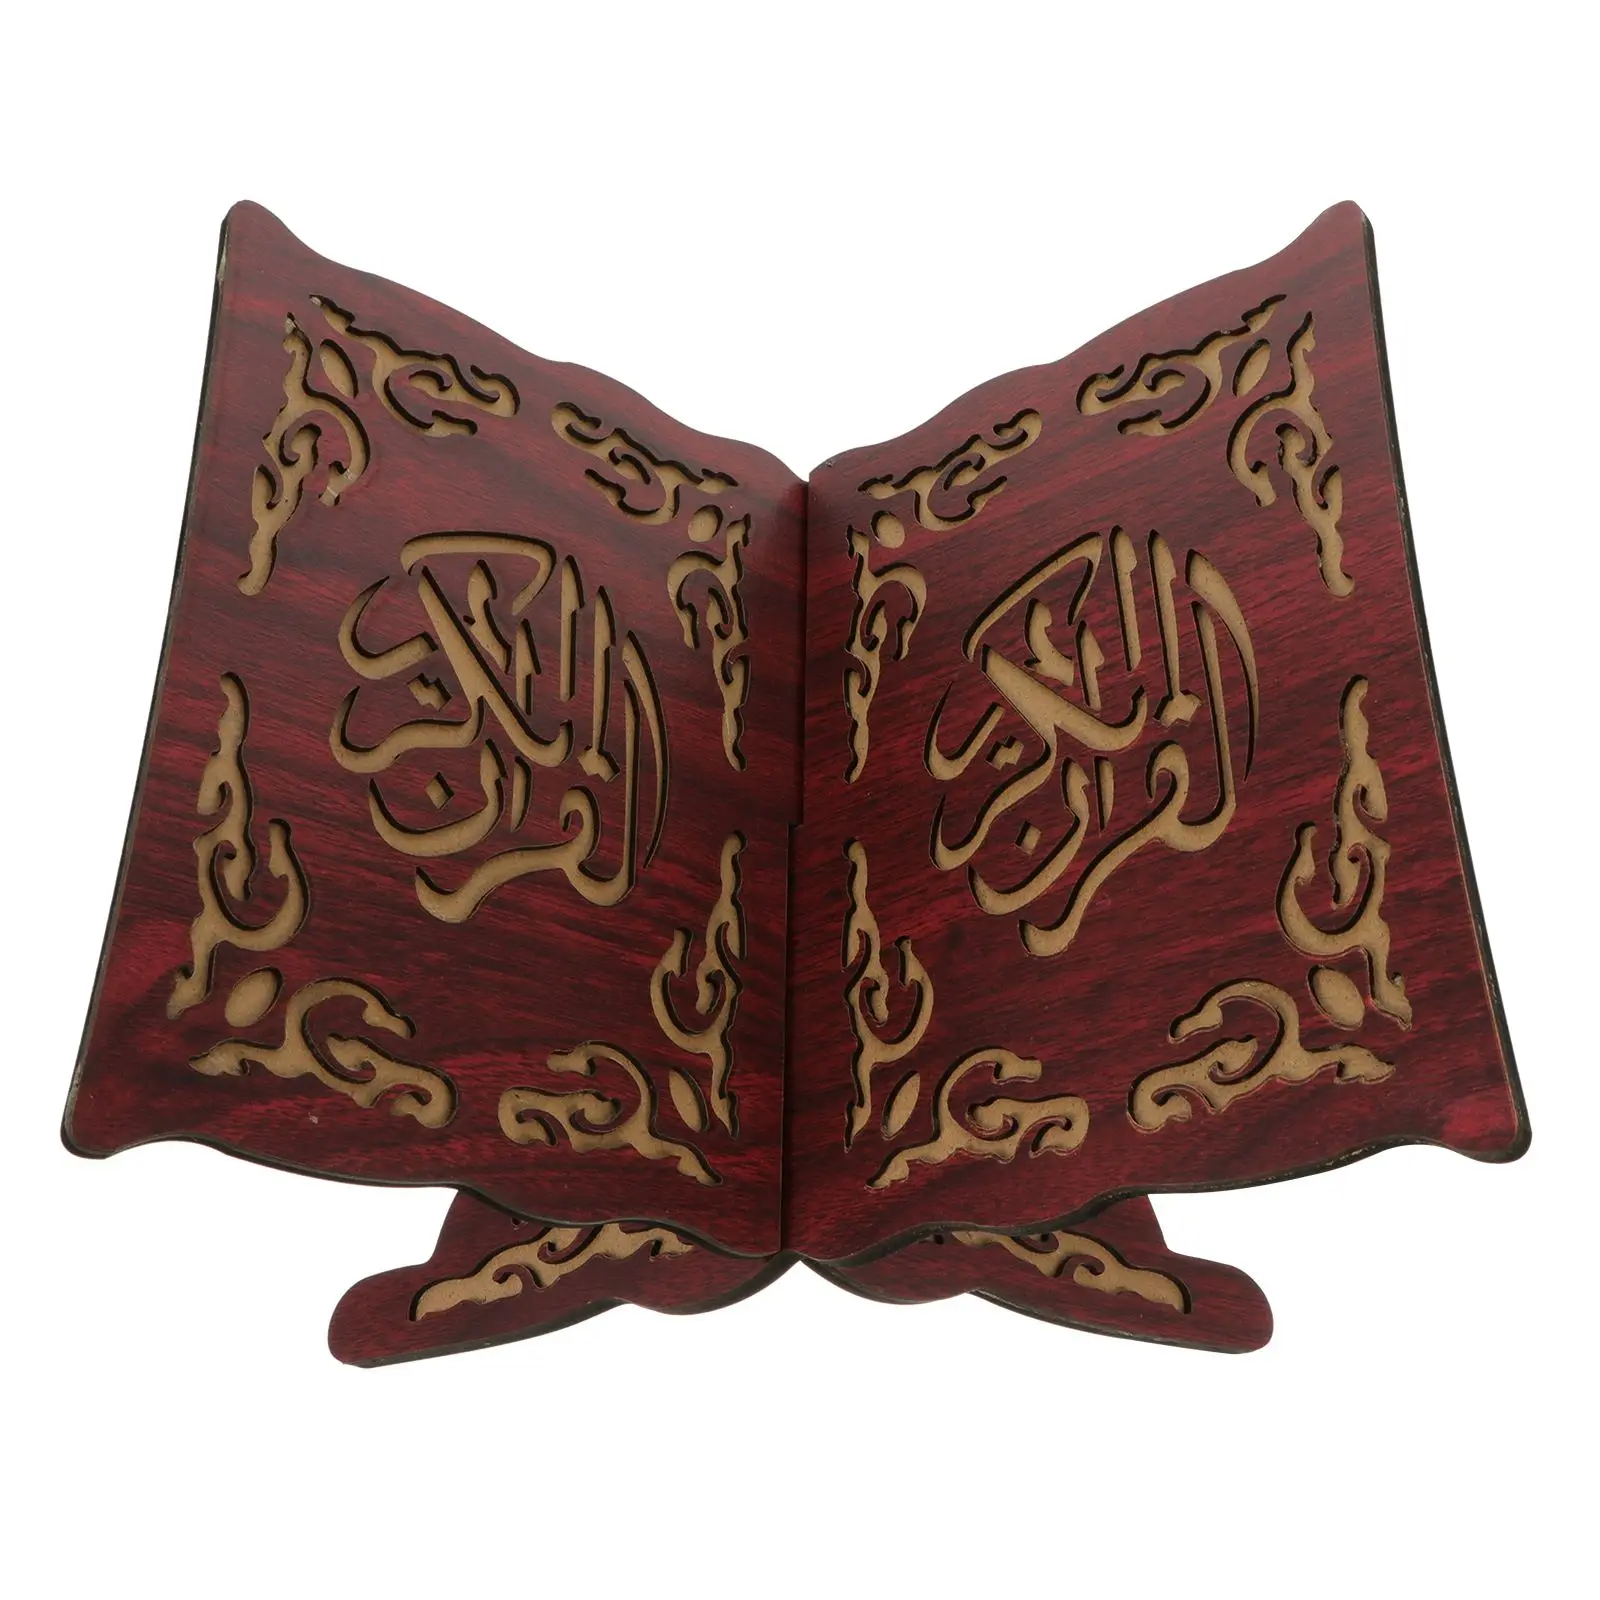 

Wooden Muslim Book Holder Stand Bookshelf Prayer Book Holder Muslim Ornament Decorative Wooden Prayer Bible Stand Festival